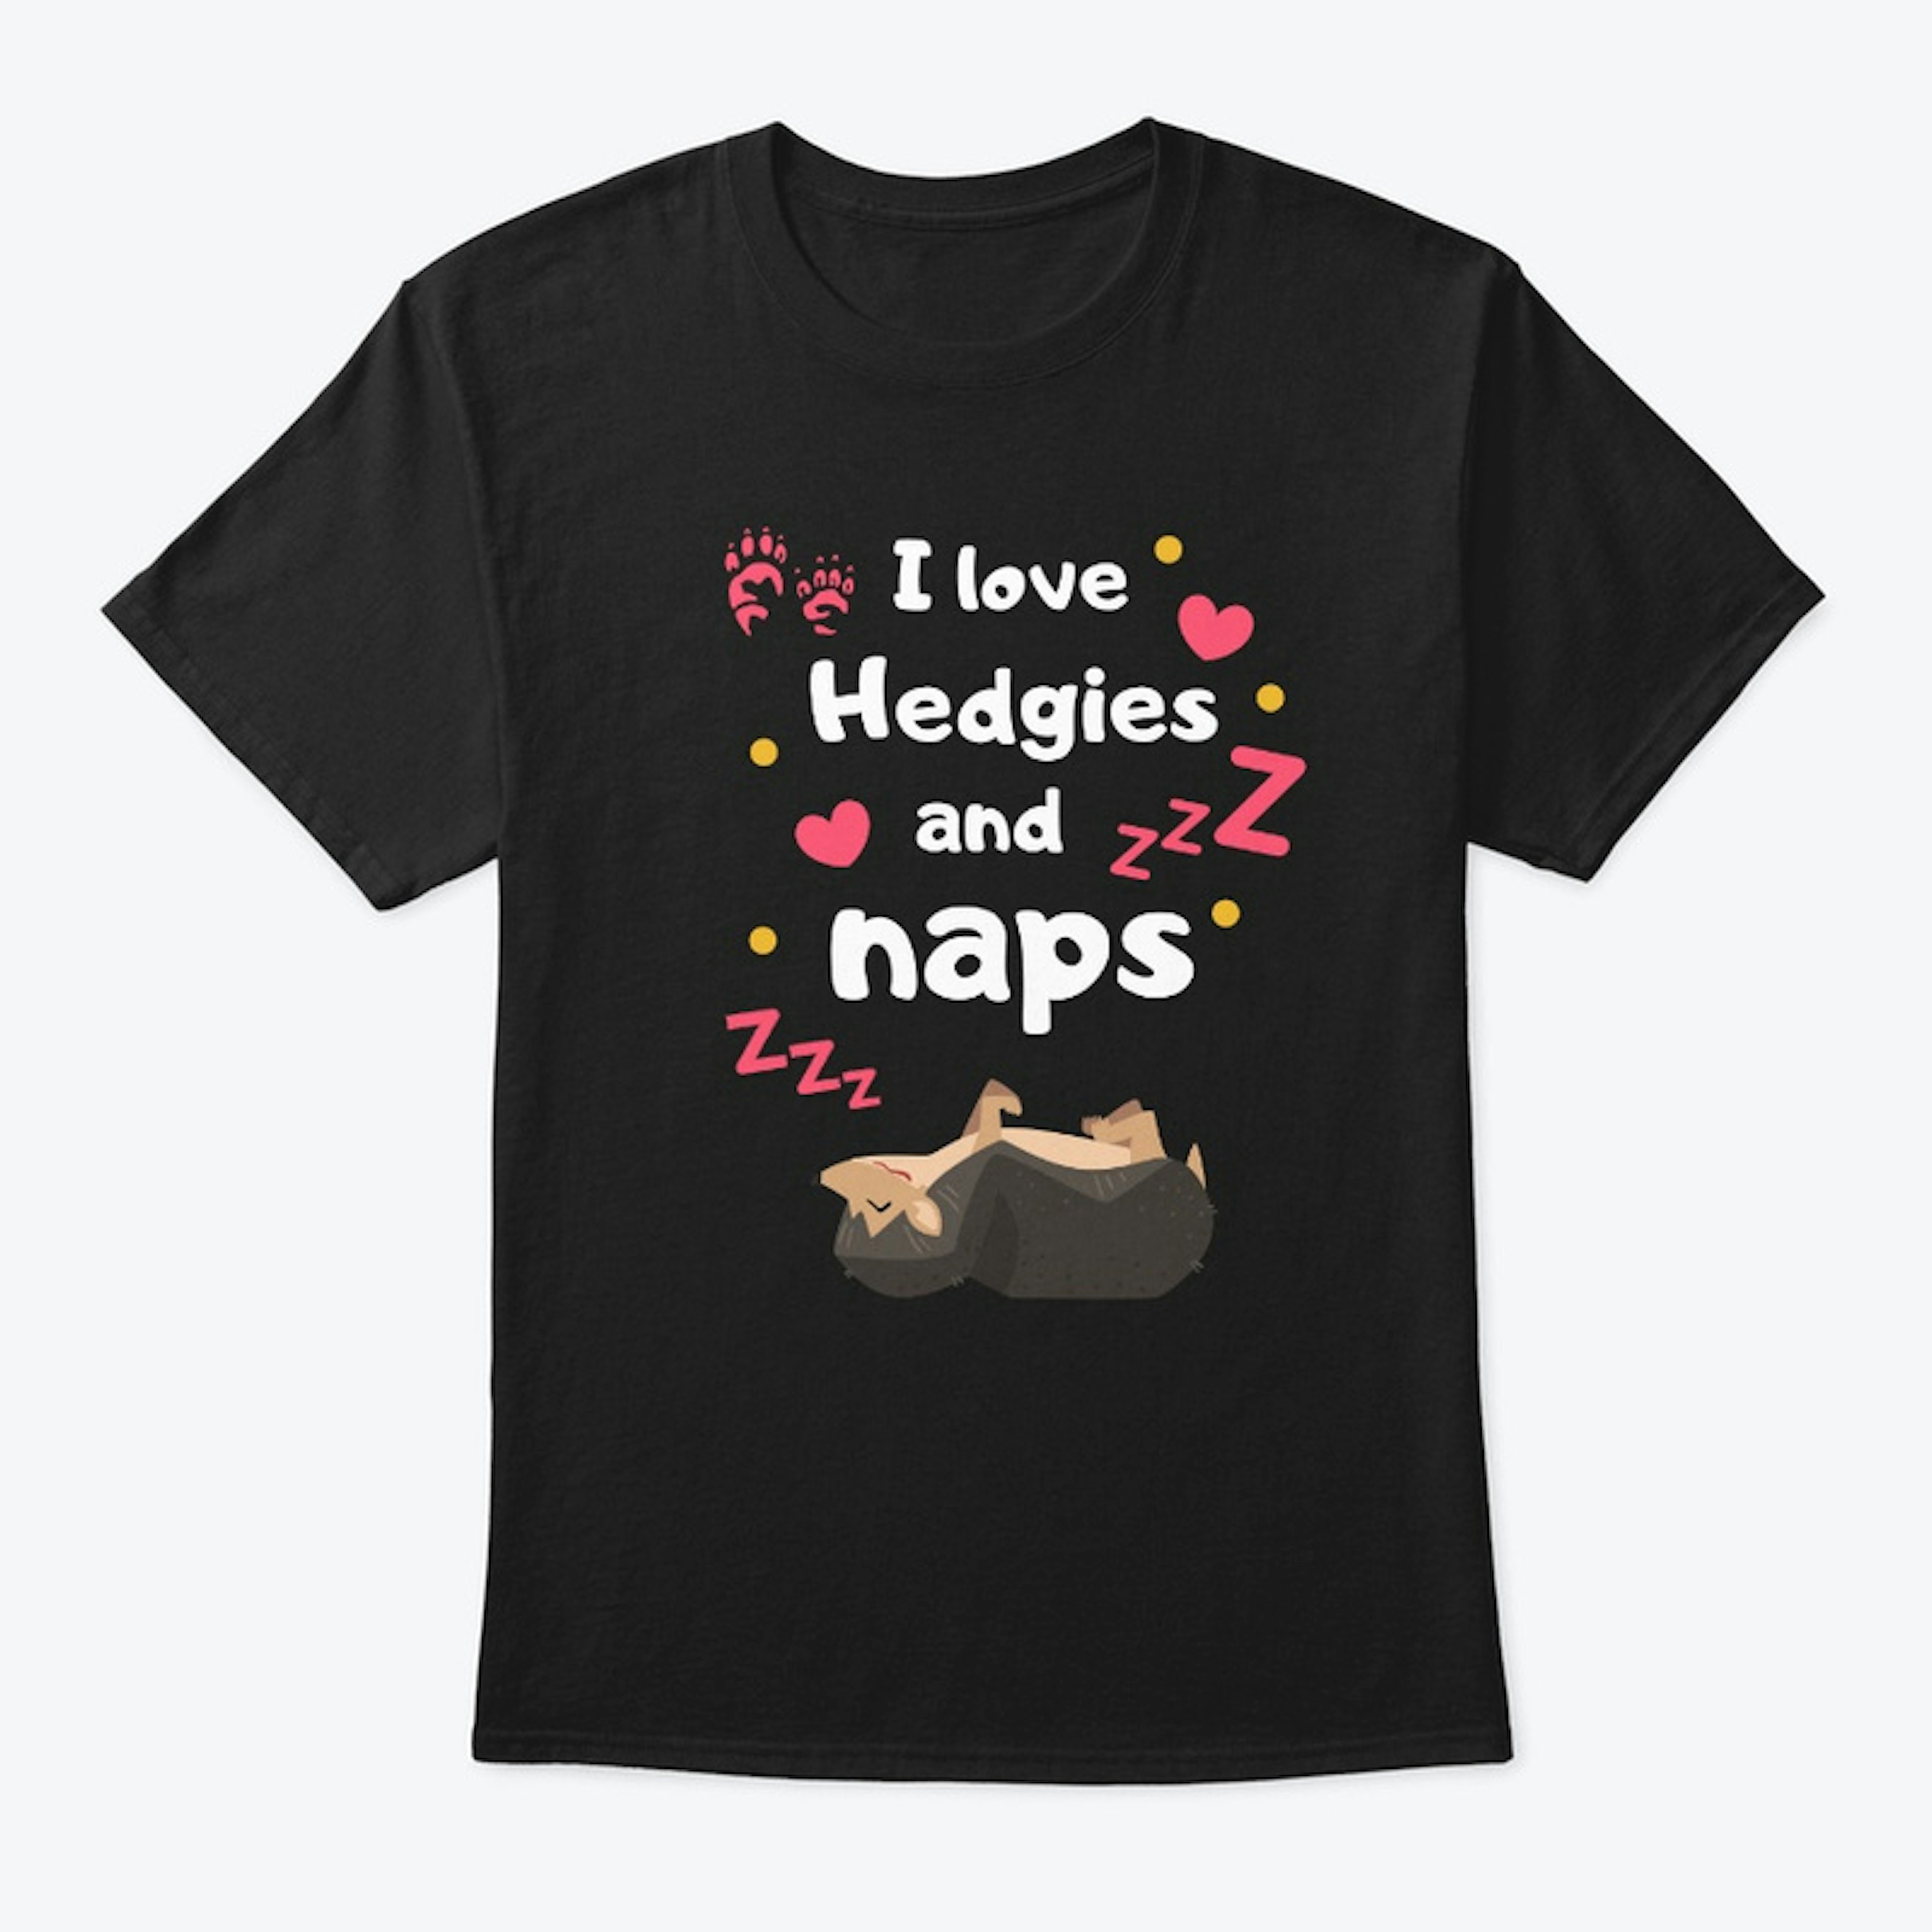 I Love Hedgies And Naps!